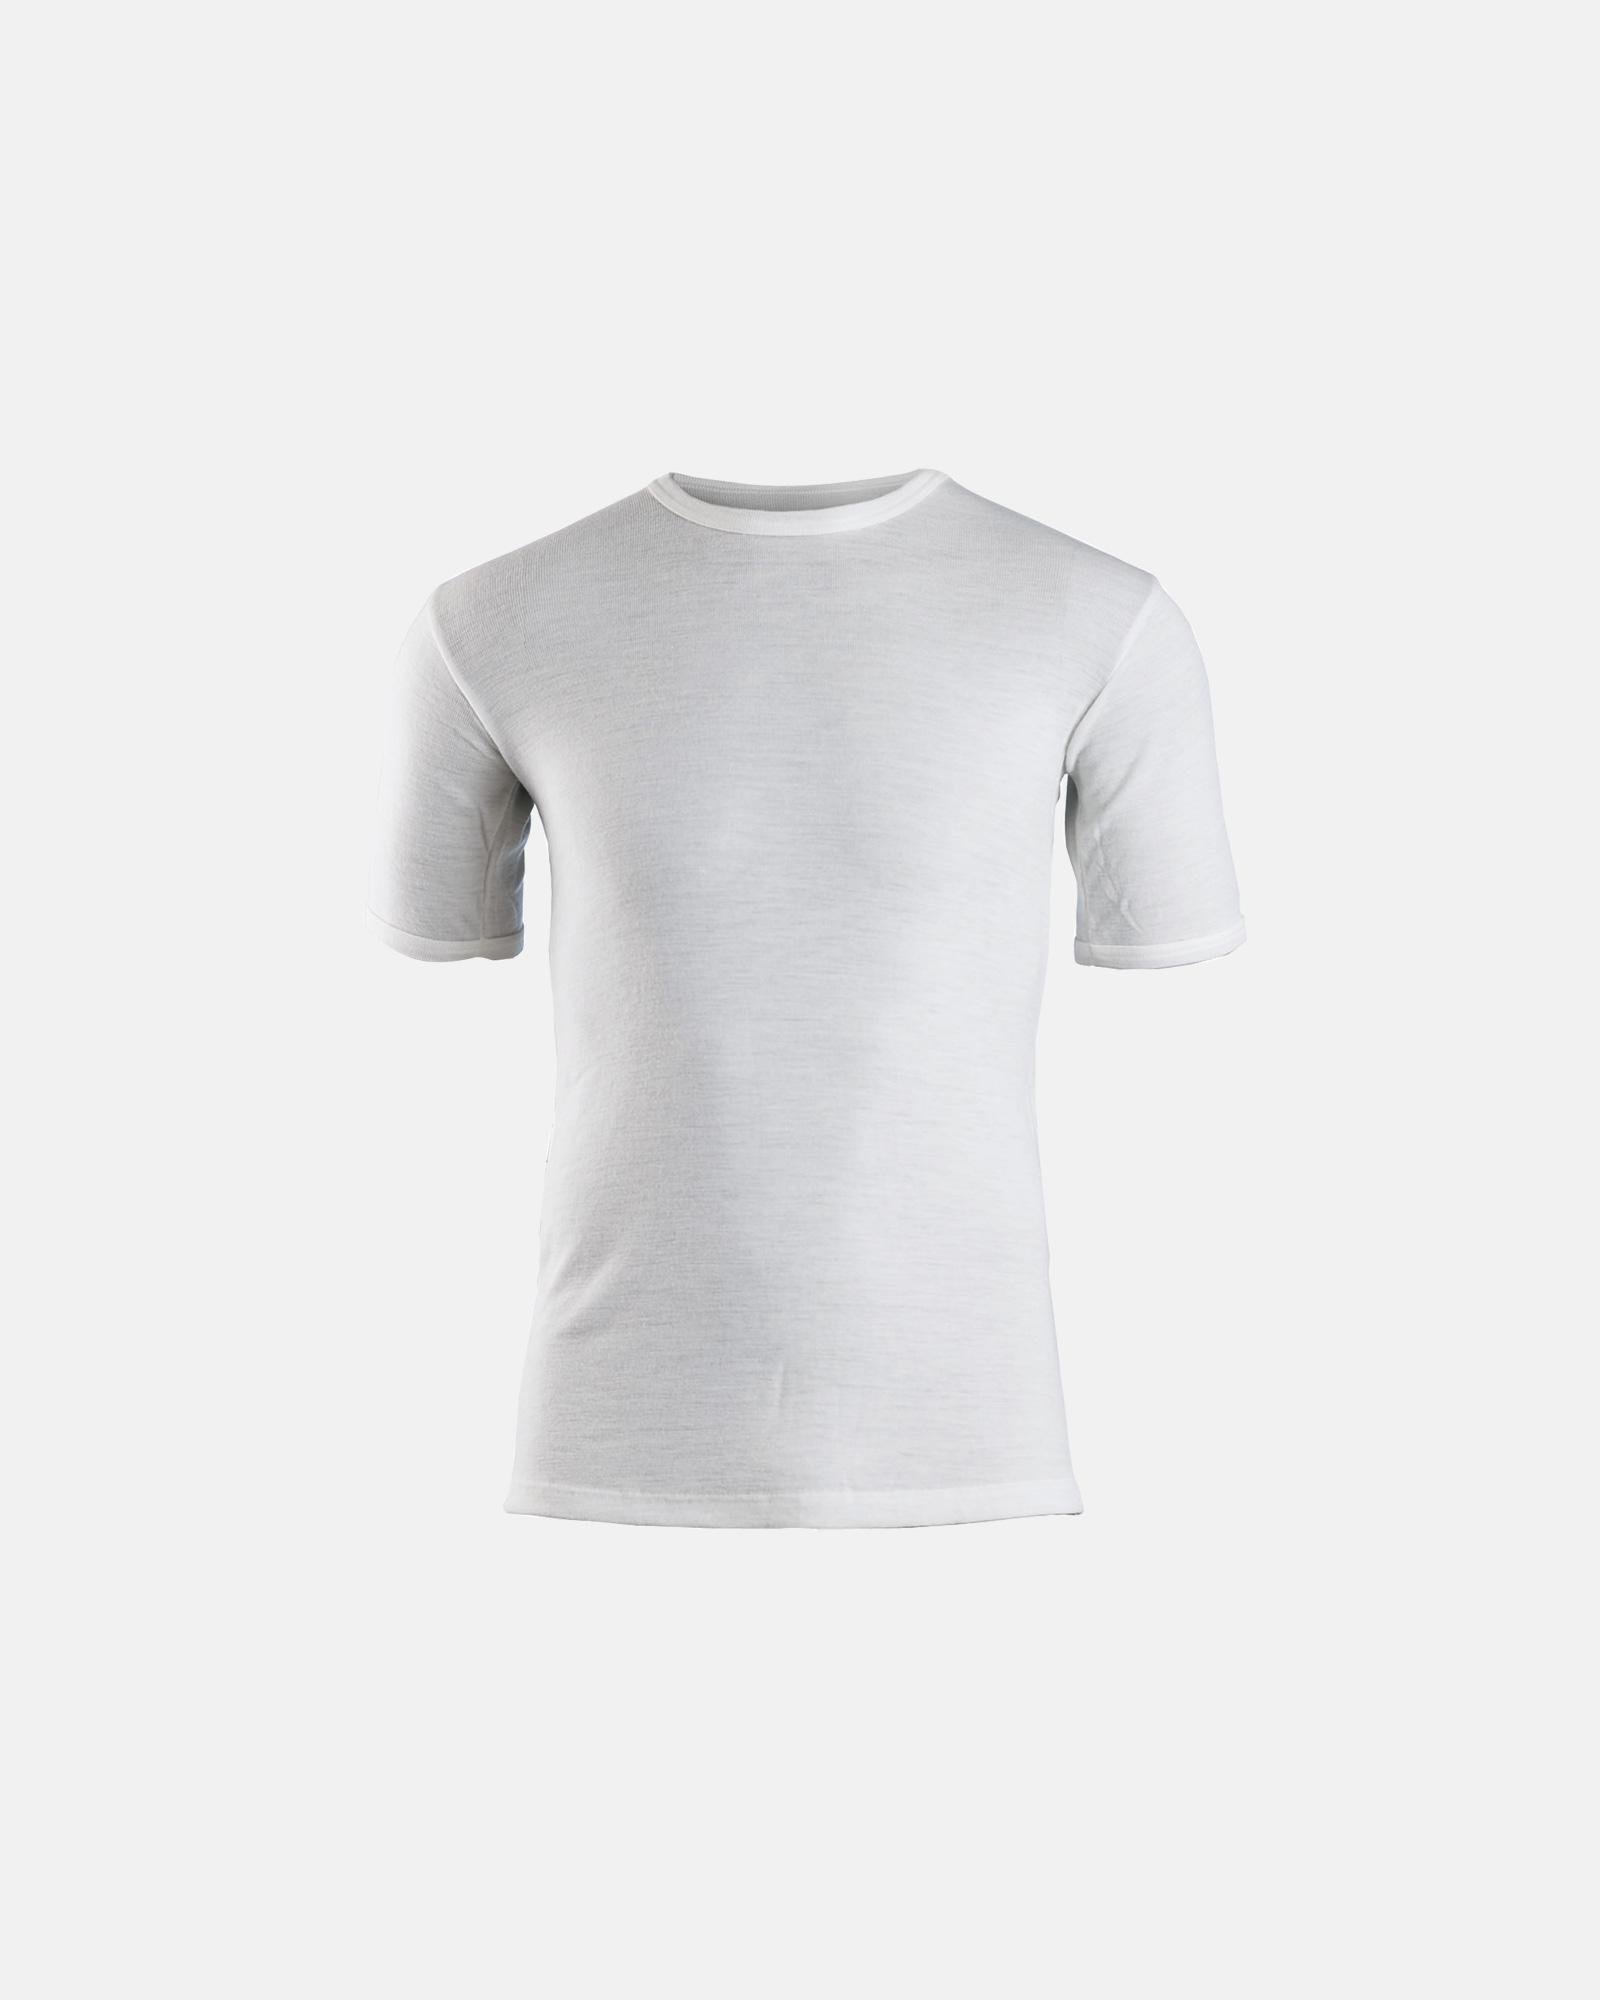 T-shirt ærmer | 100% uld | beige fra Olympia - hos Intimo